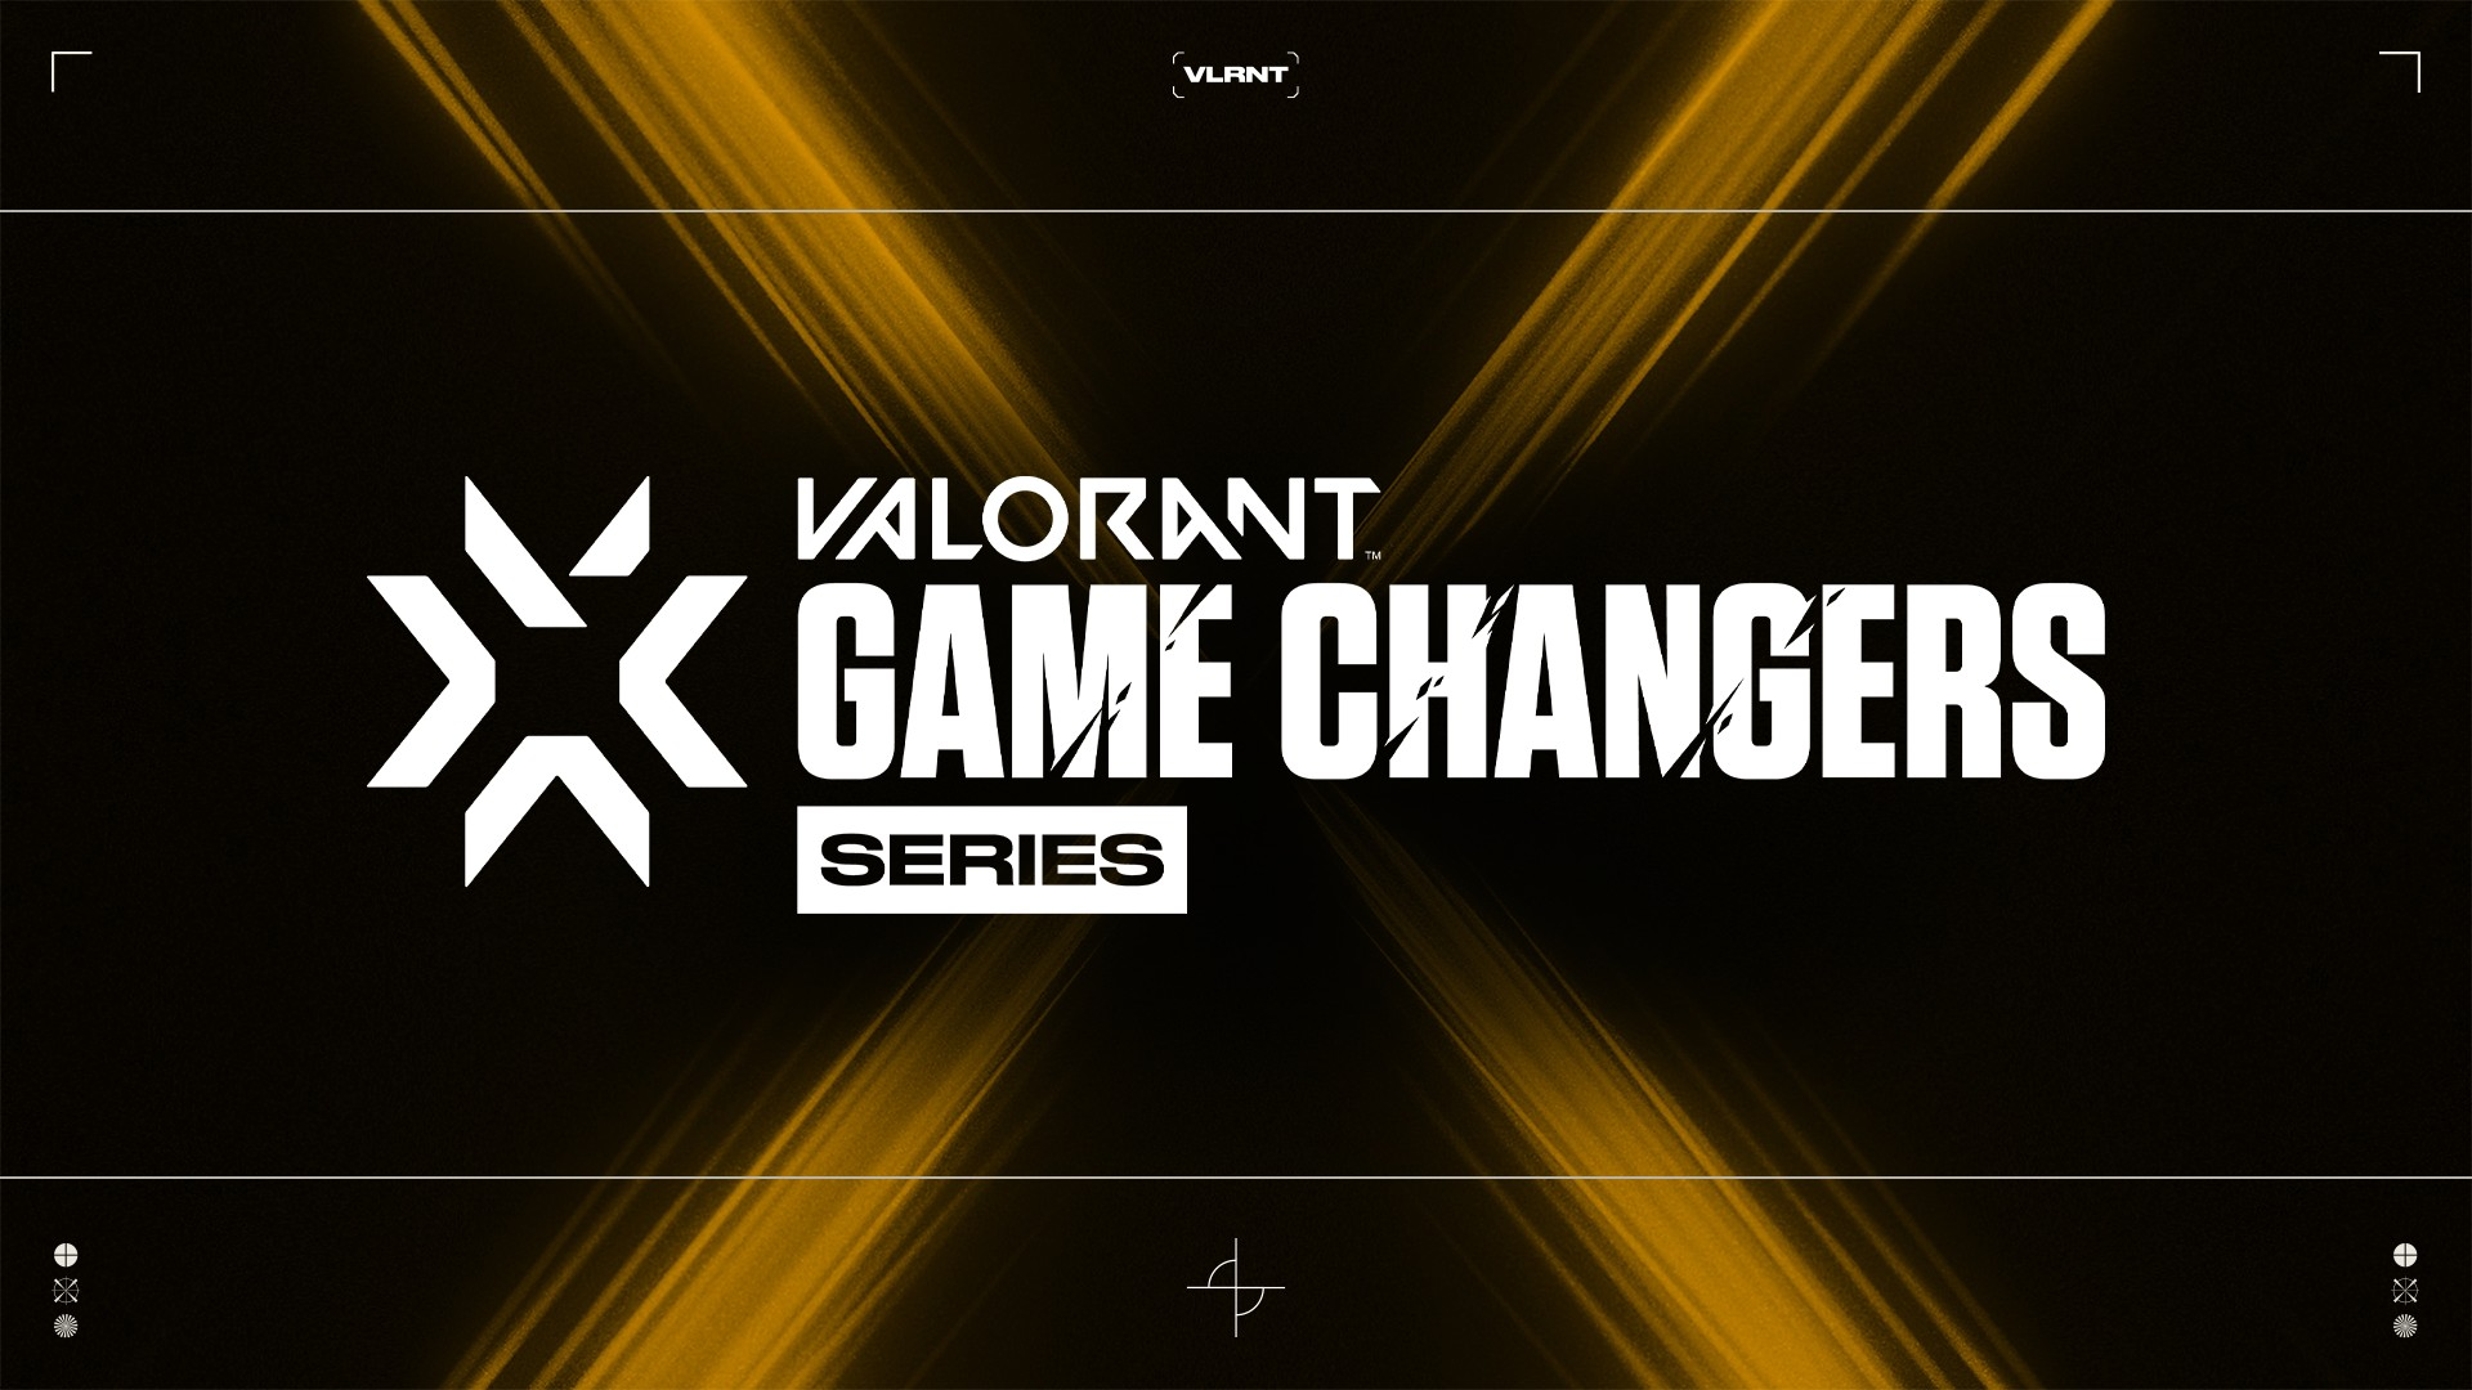 G2 Gozen win VALORANT Game Changers Championship